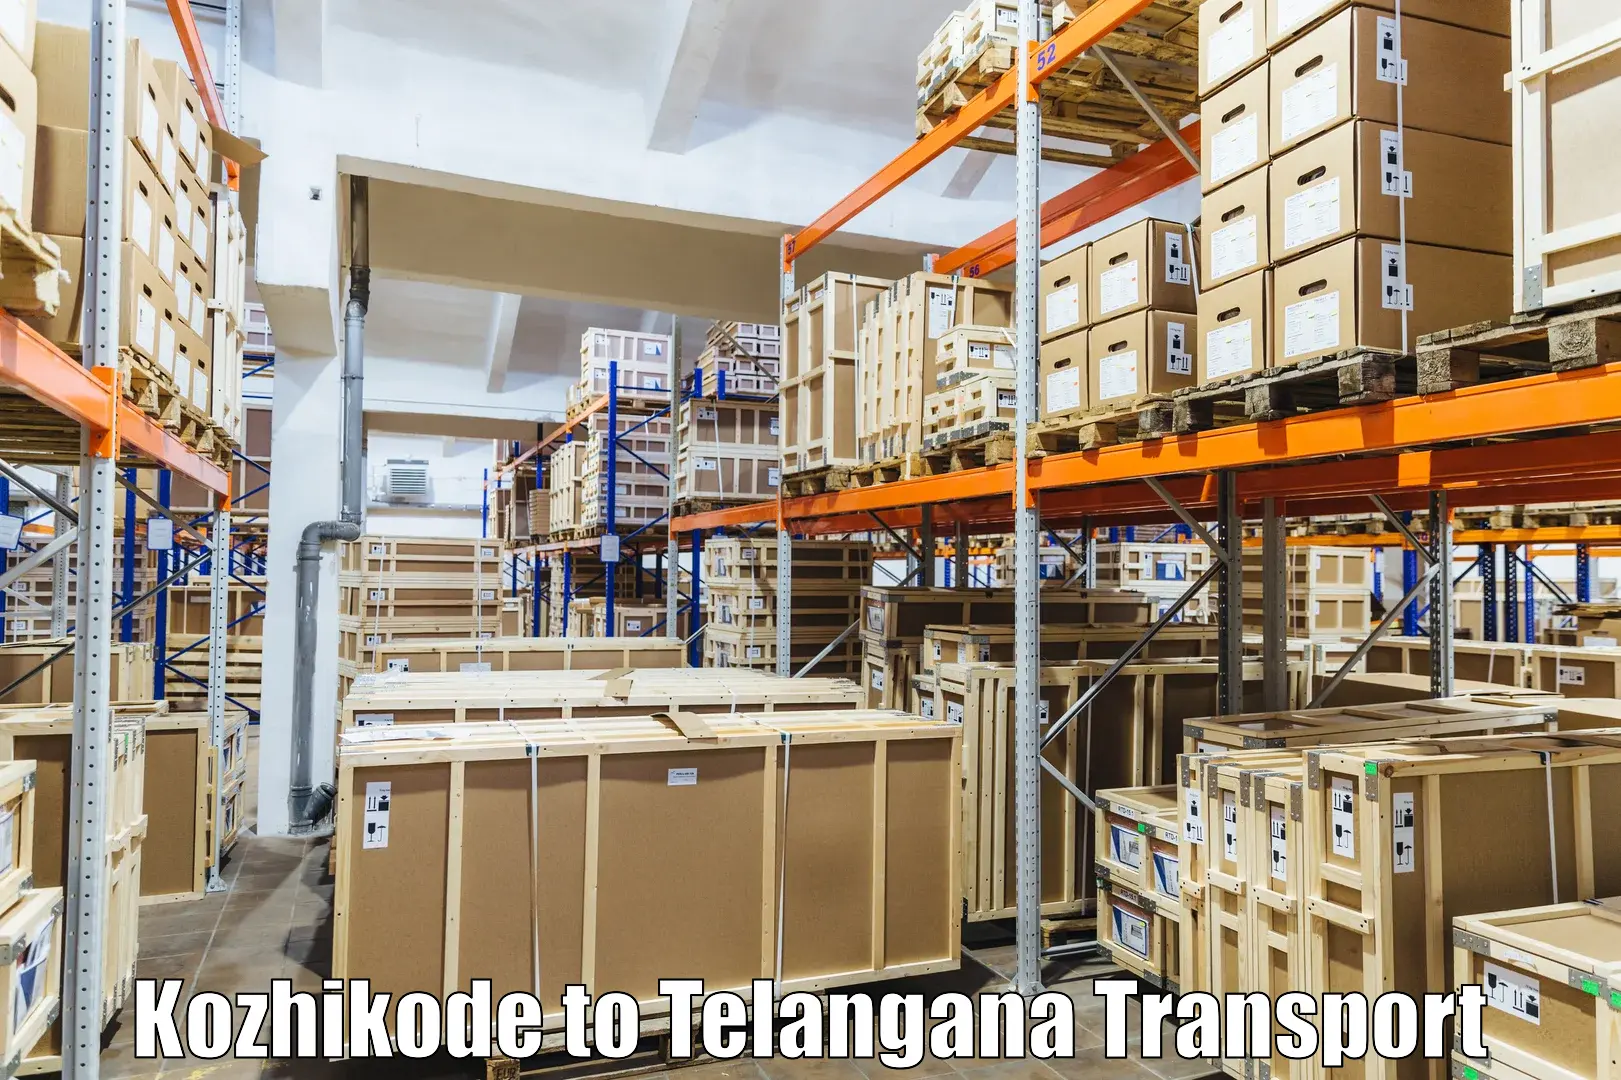 Transport in sharing Kozhikode to Ichoda